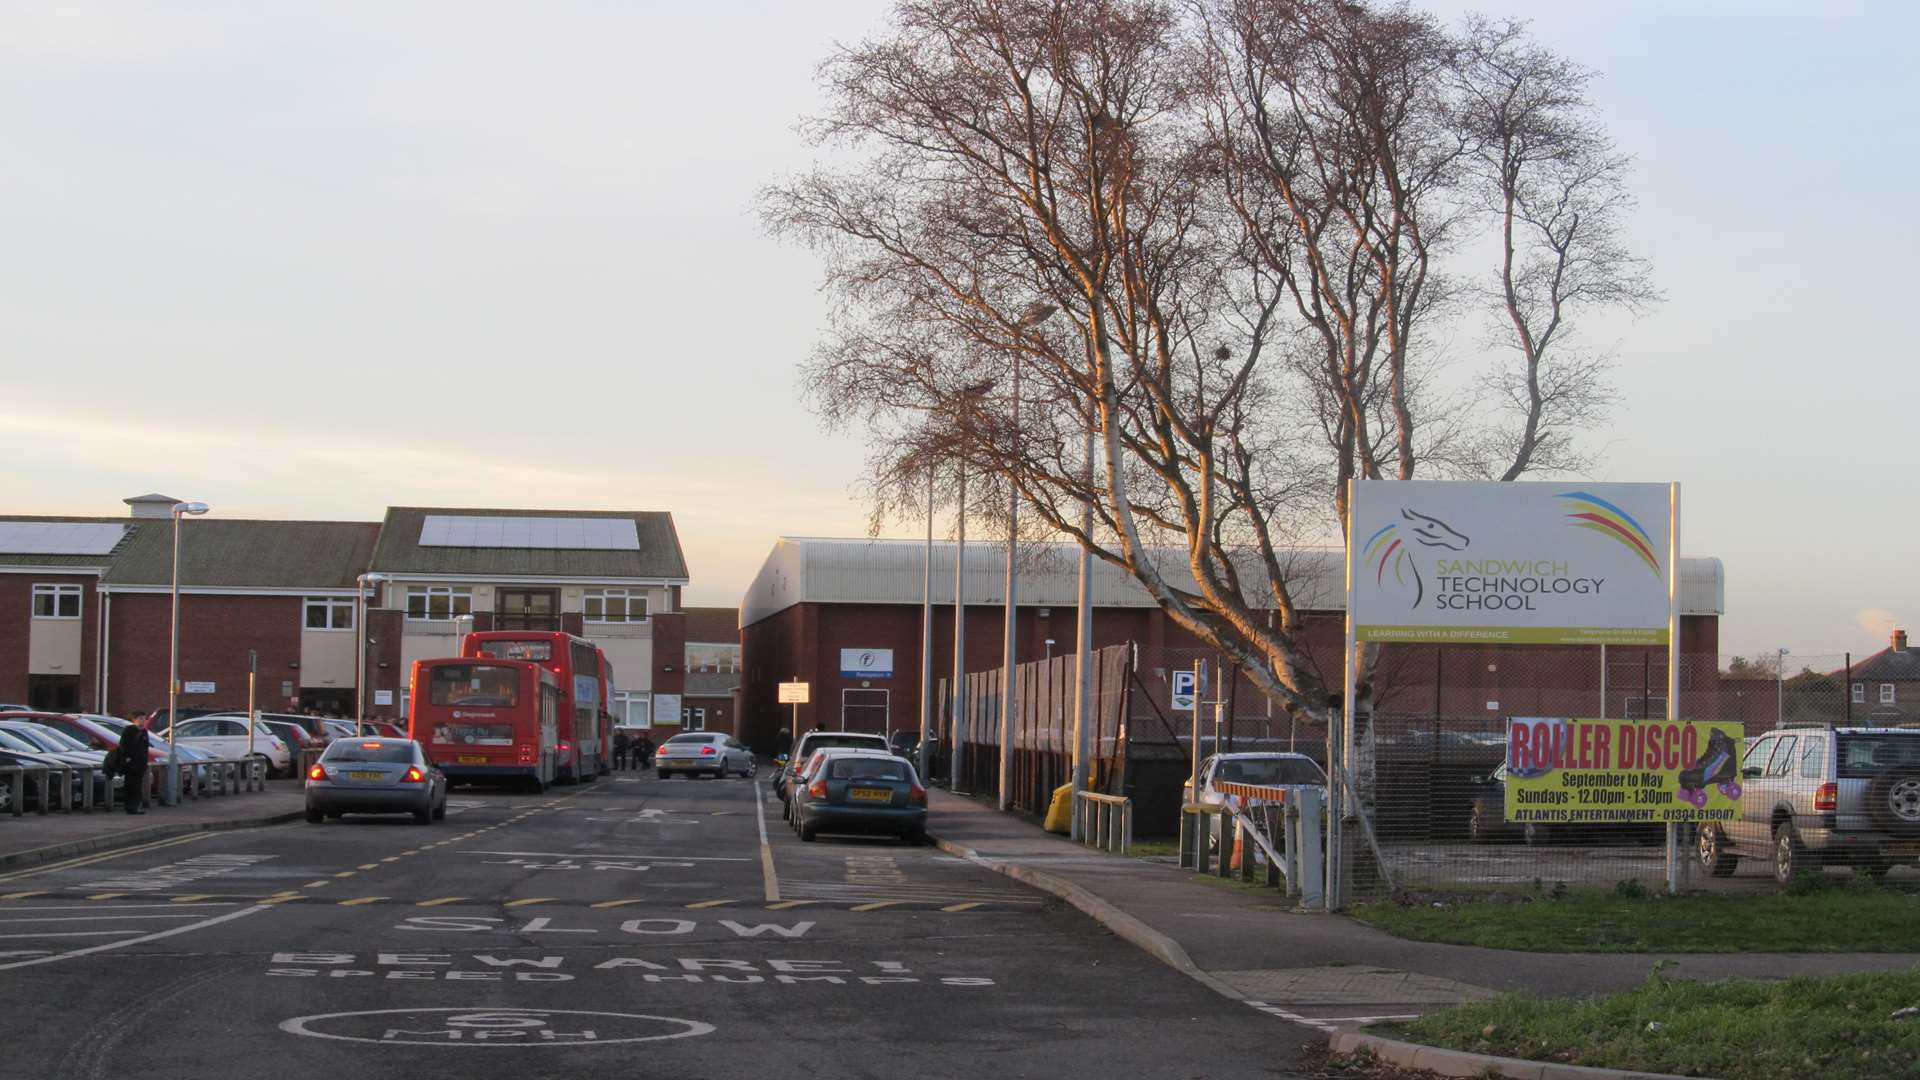 Sandwich Technology School faces redundancies